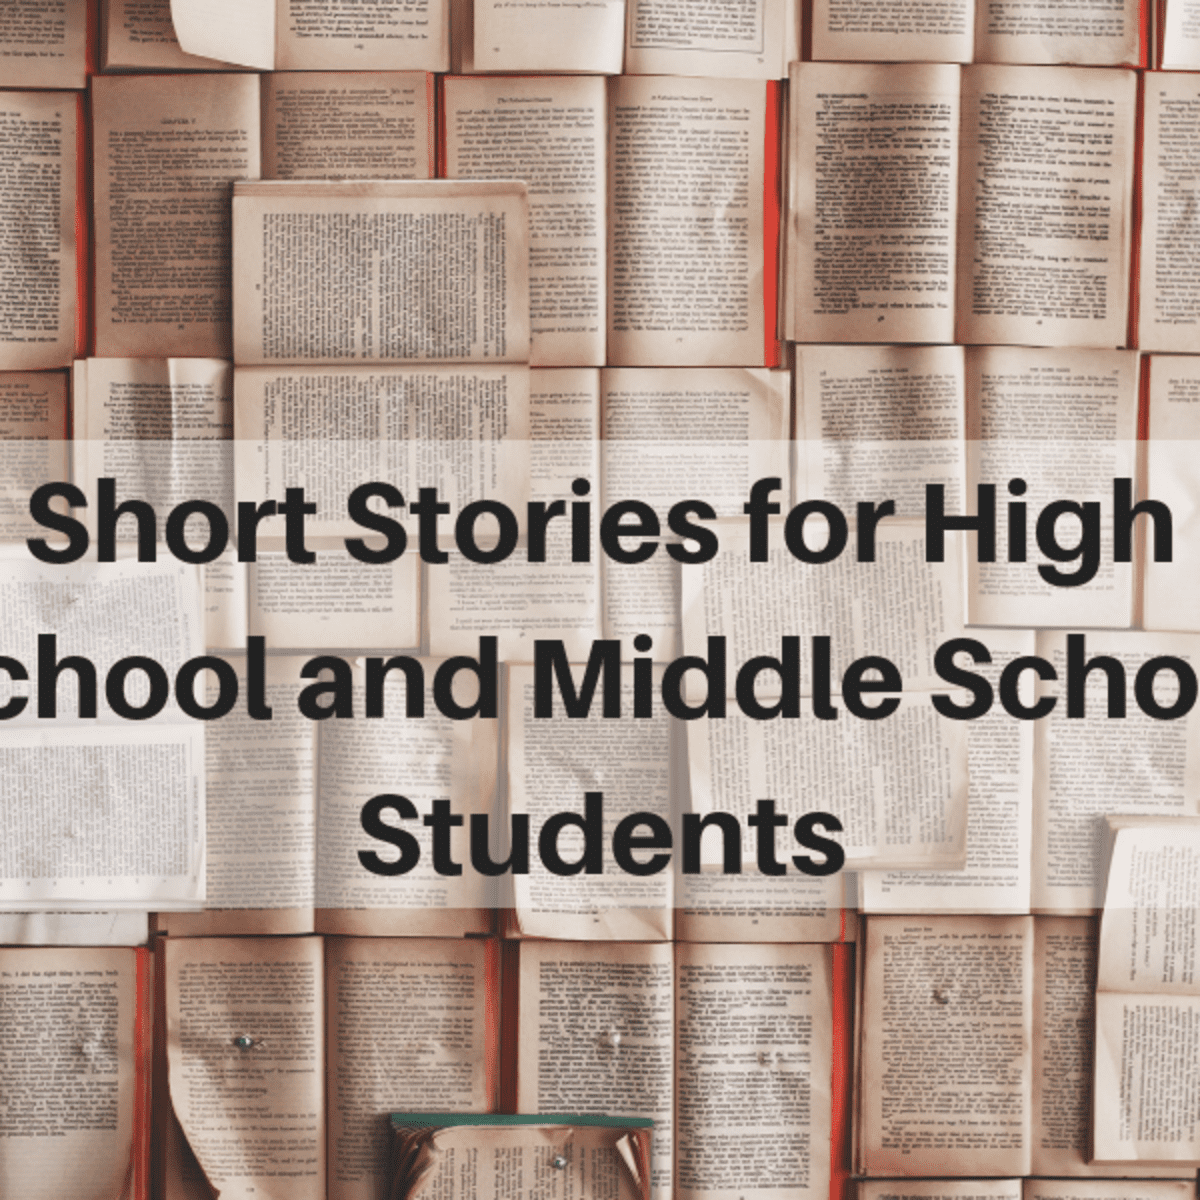 narrative essay examples for highschool students